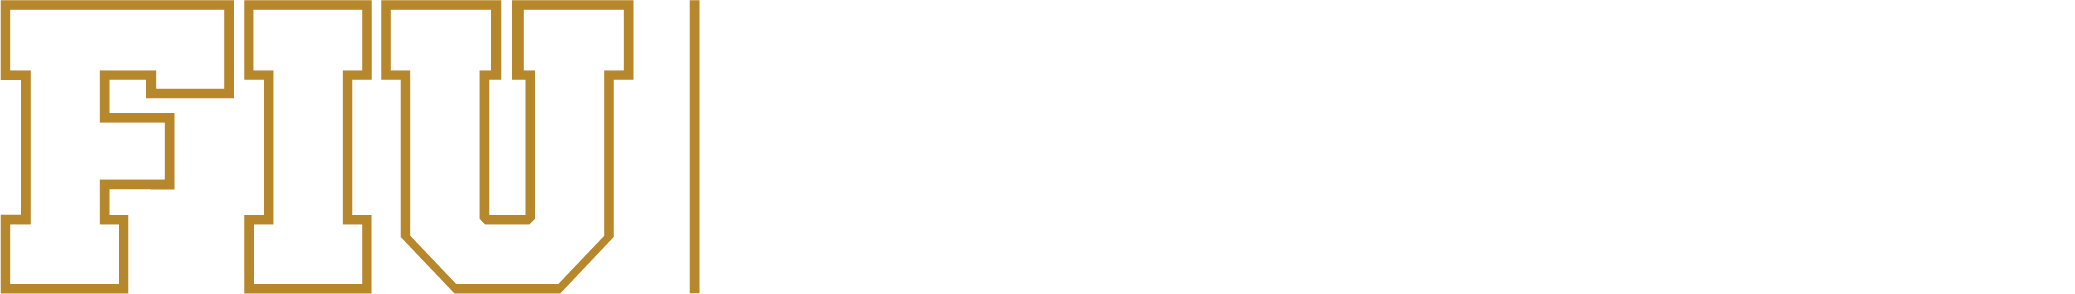 Parking & Transportation Homepage